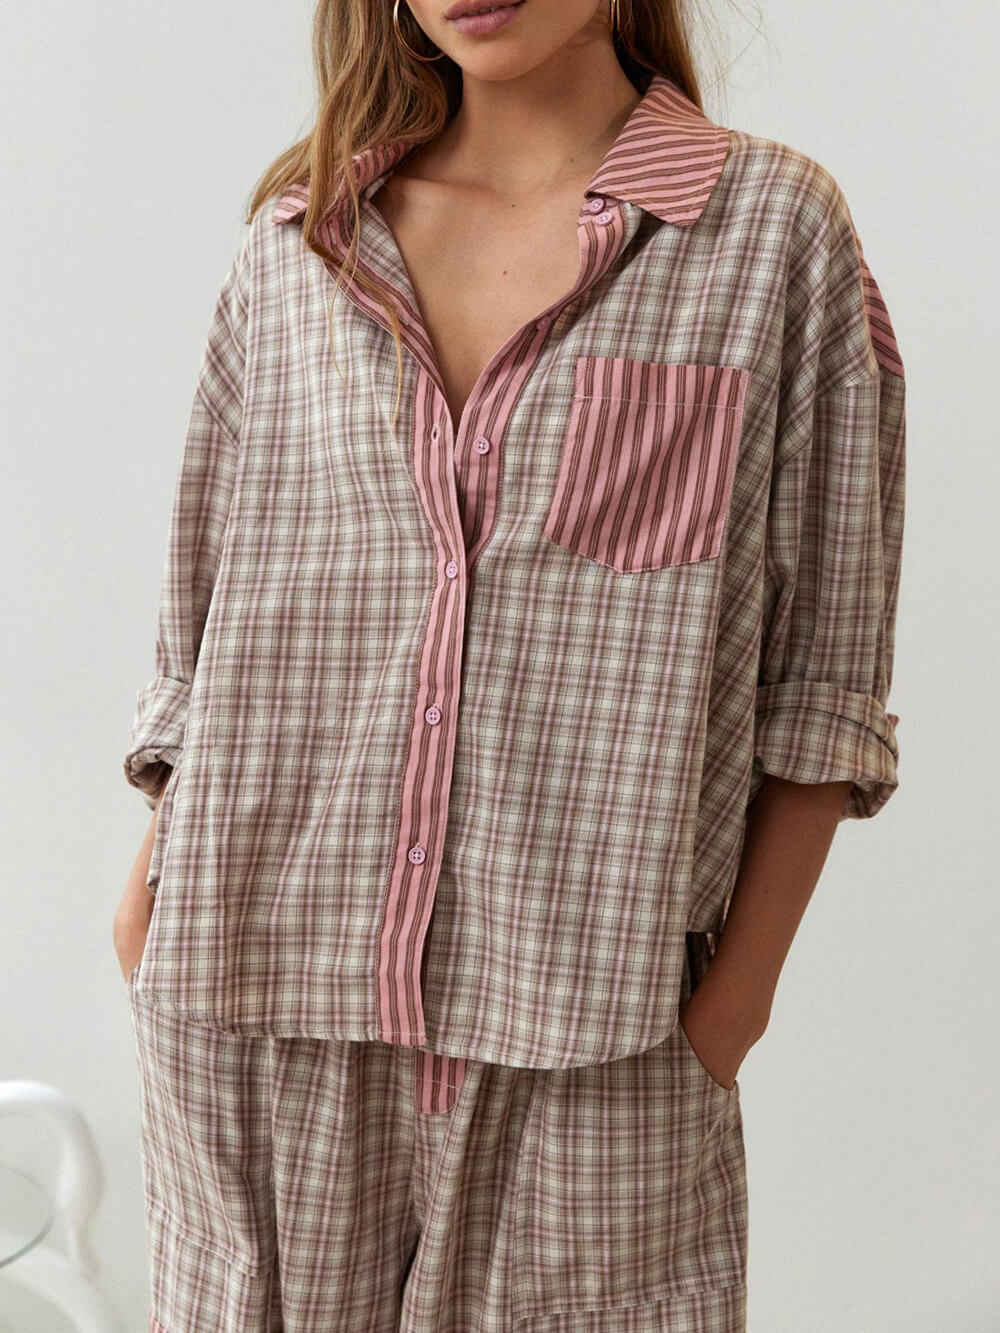 Lisingtool Pajamas for Women Set Women's Simple Loose Beauty Back Thin Home  Clothes Suspender Shorts Suit Fashion Pajamas Pajama Pants Pink 